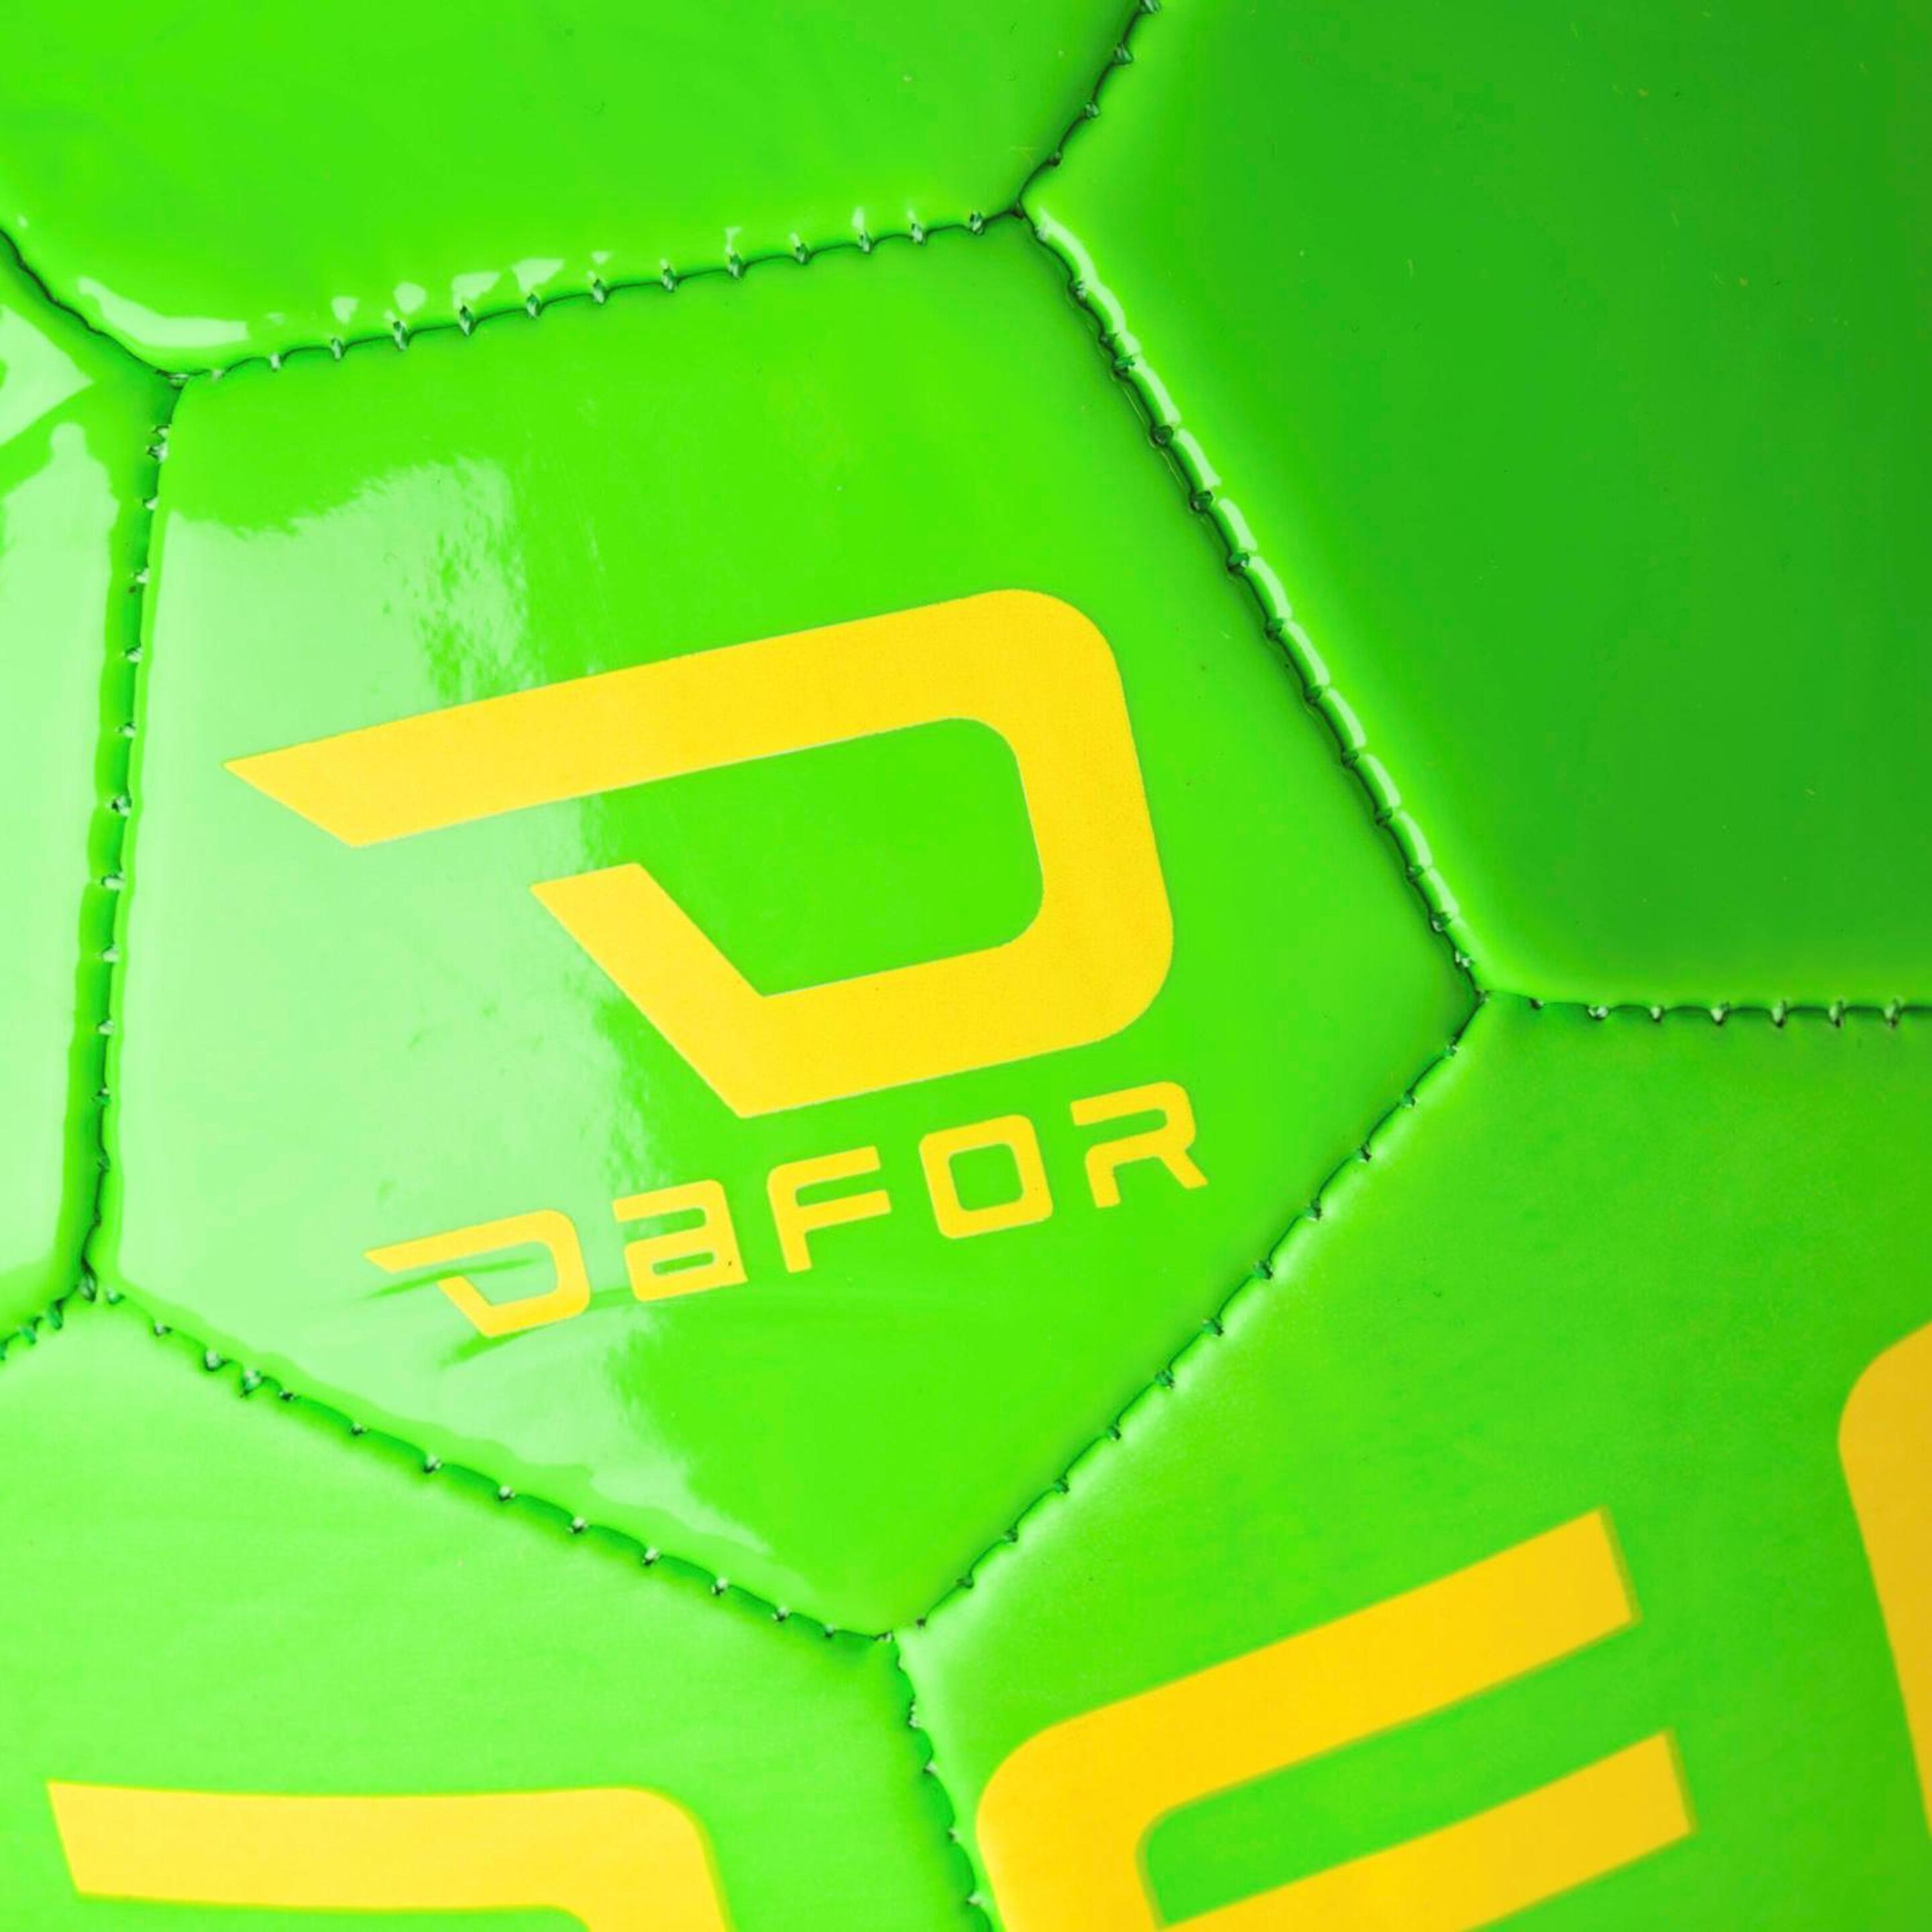 Balón Fútbol Dafor Trainning Verde